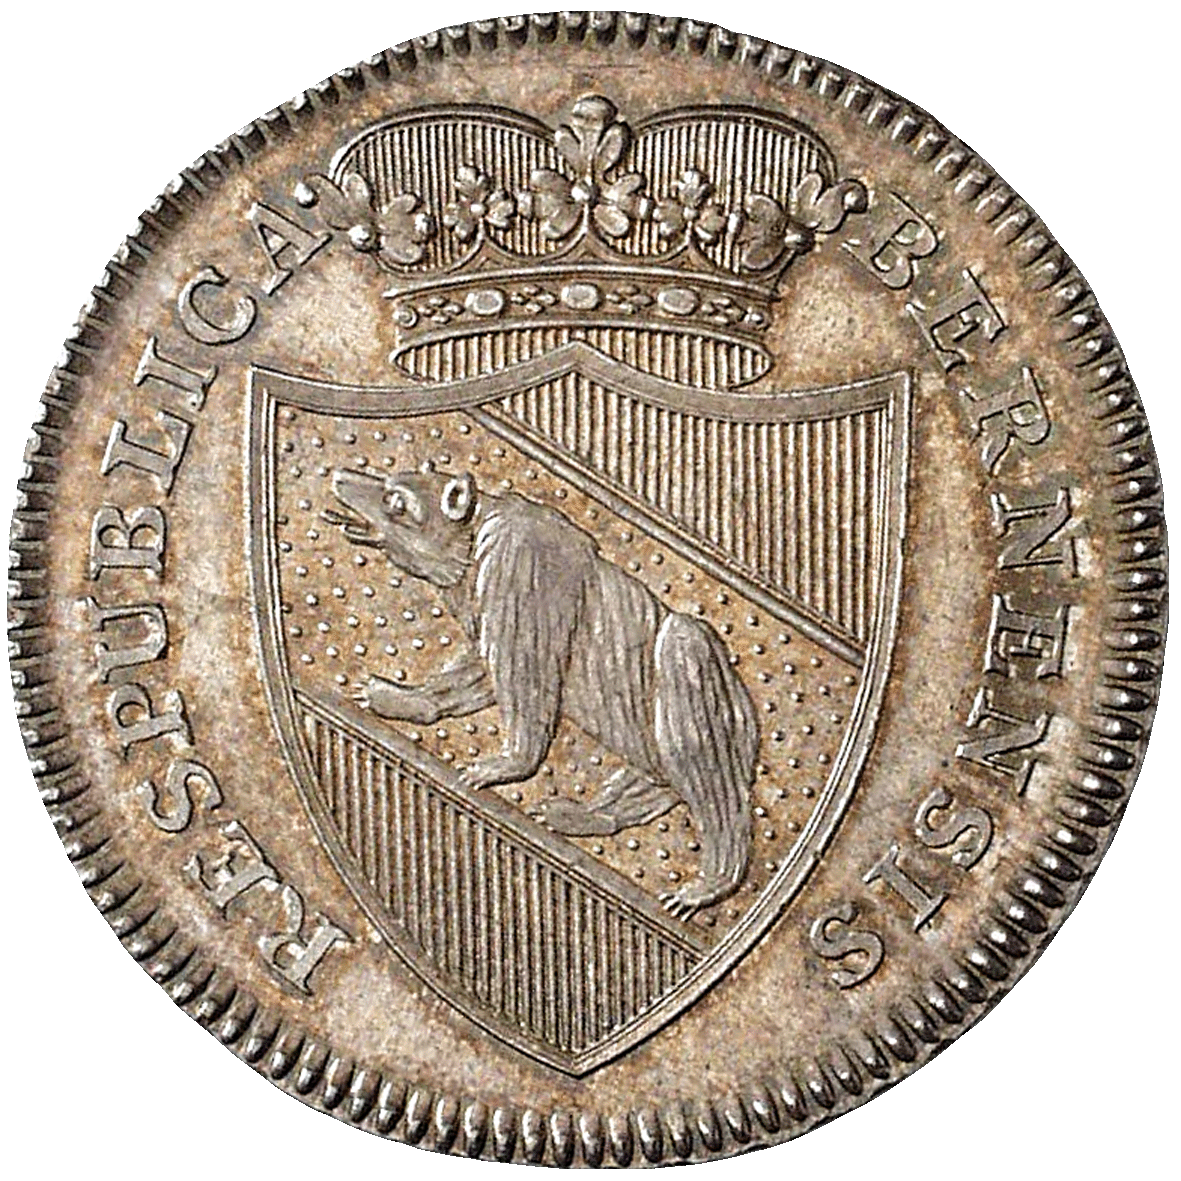 Republic of Berne, 1/2 Taler 1797 (obverse)